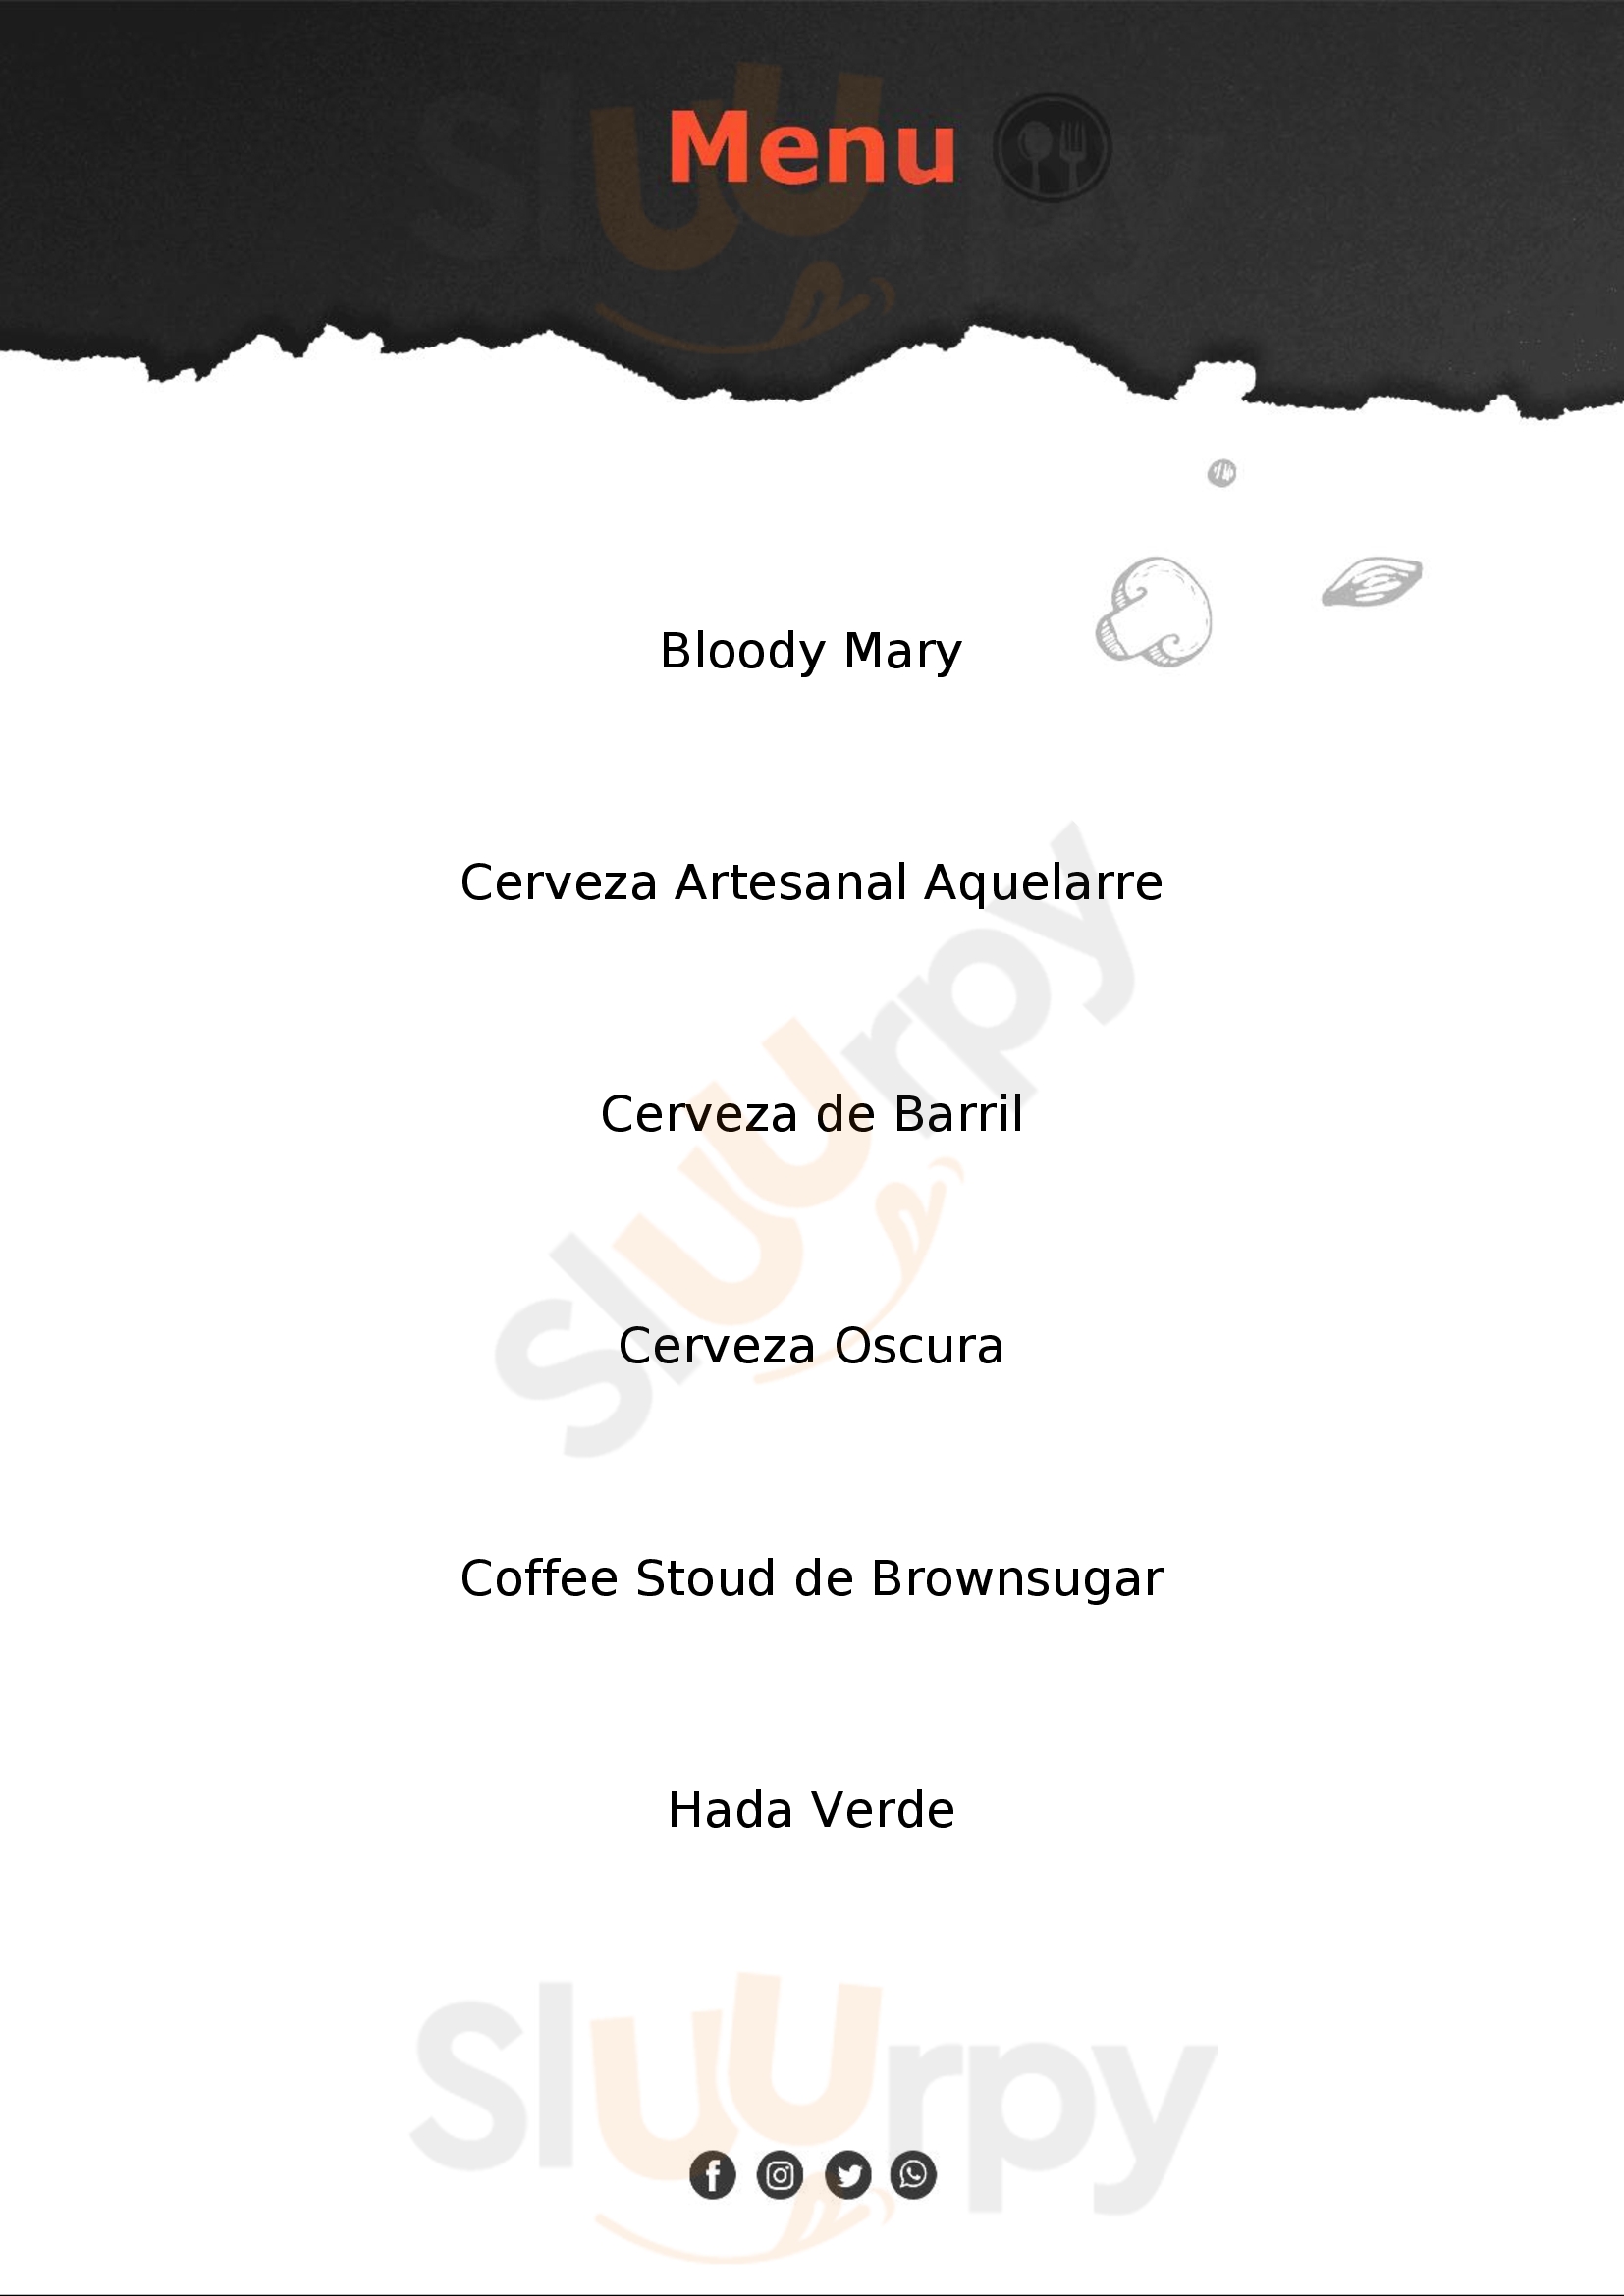 Barecito Café Cuernavaca Menu - 1